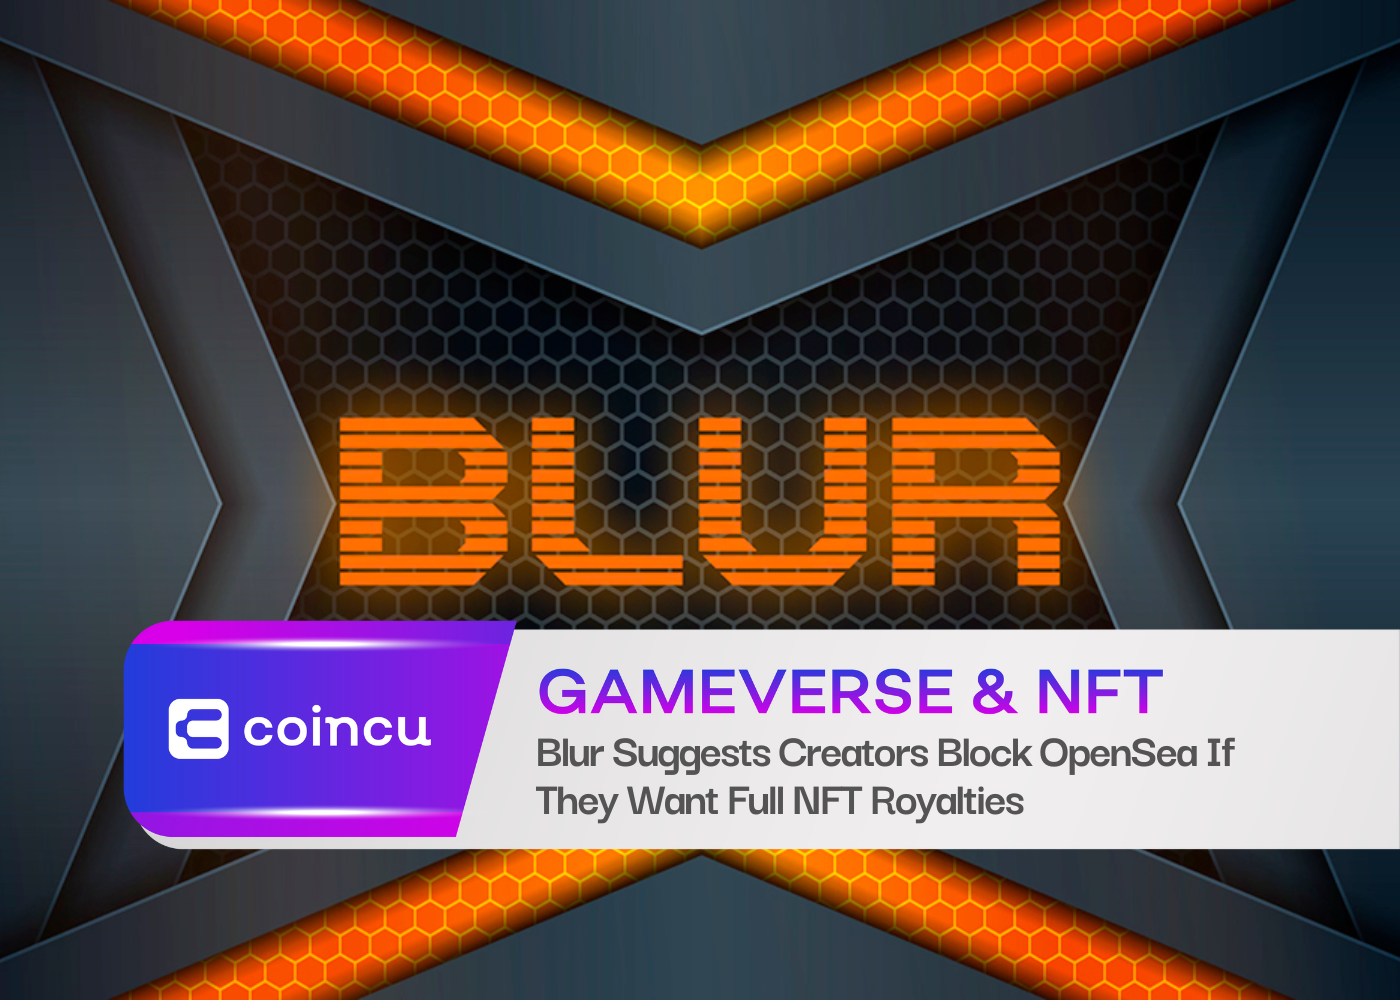 Blur Suggests Creators Block OpenSea If They Want Full NFT Royalties